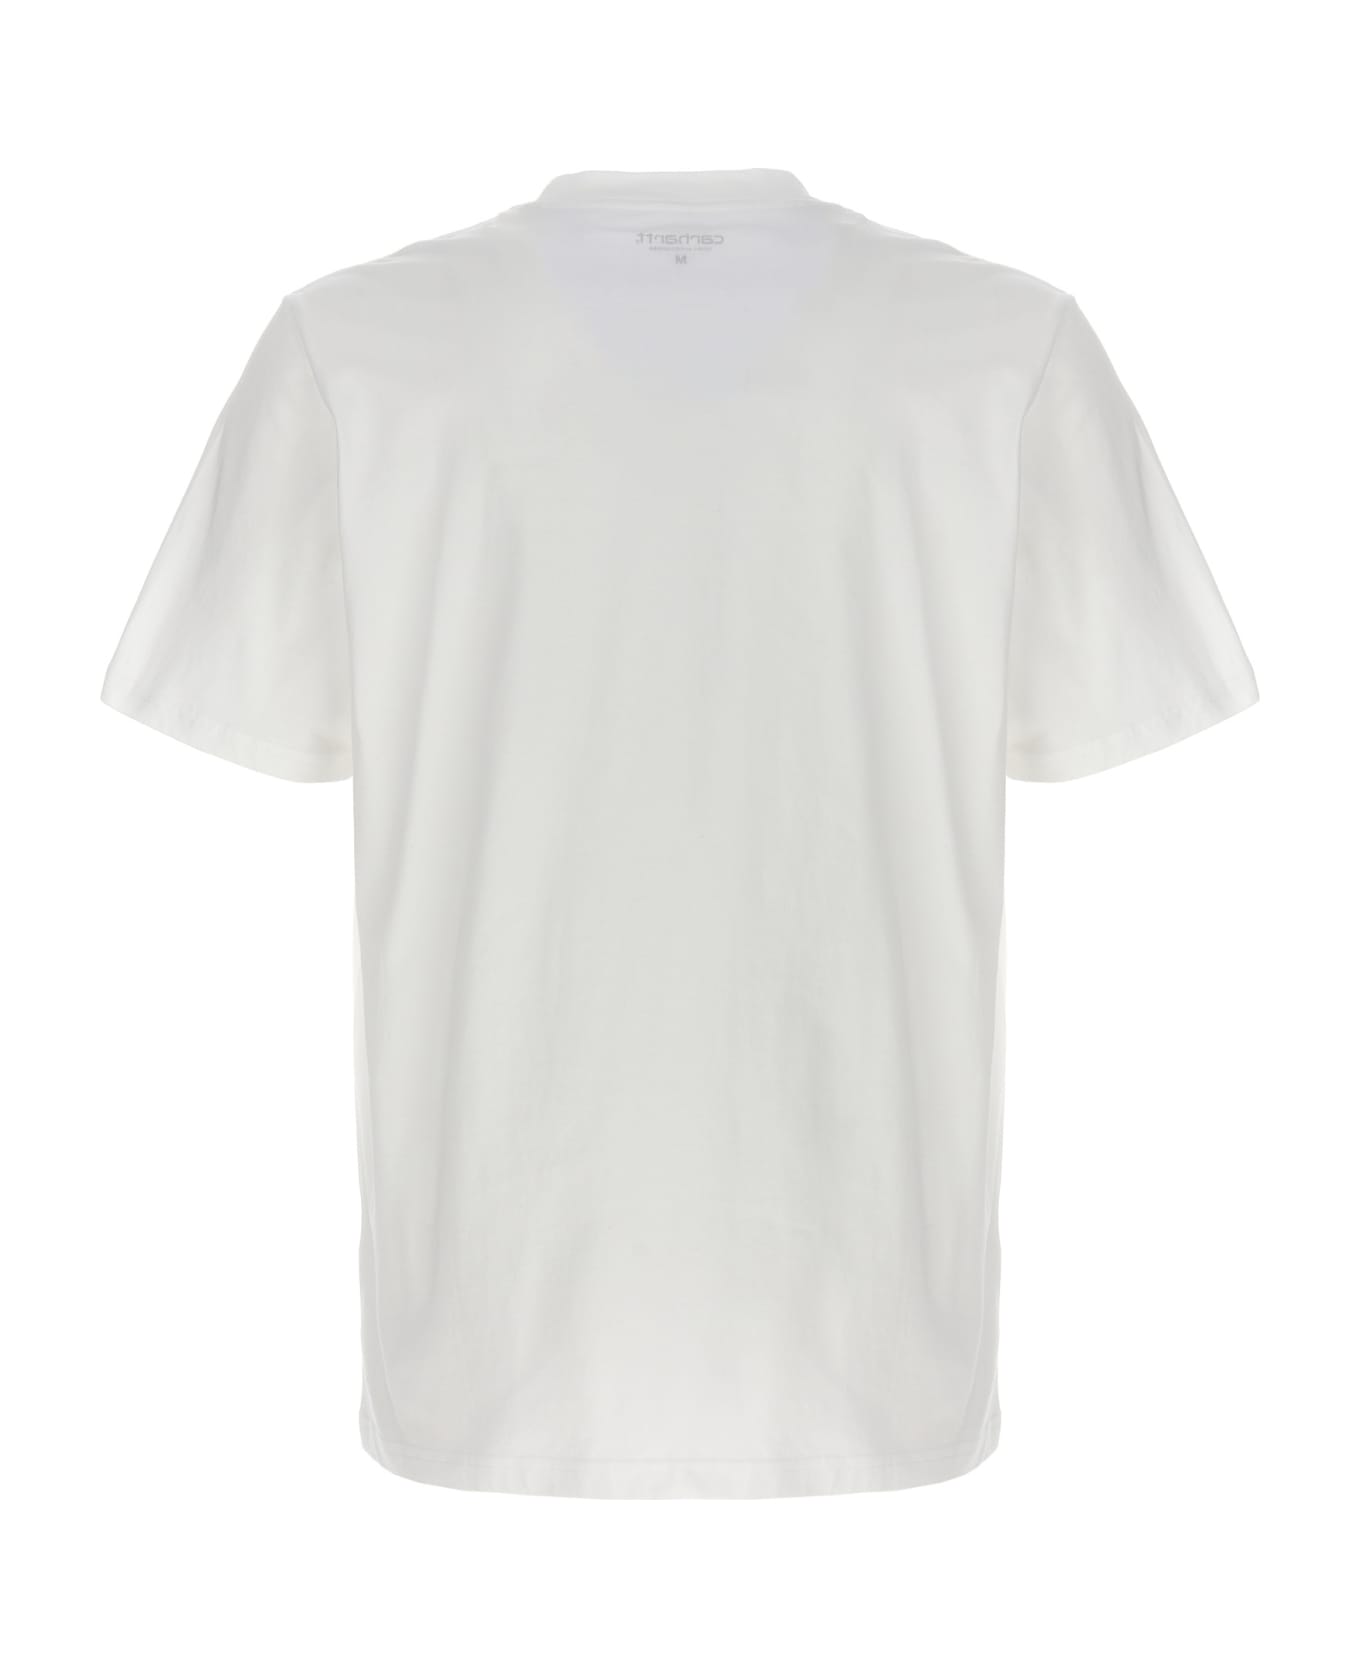 Carhartt 'tools For Life' T-shirt - White/Black